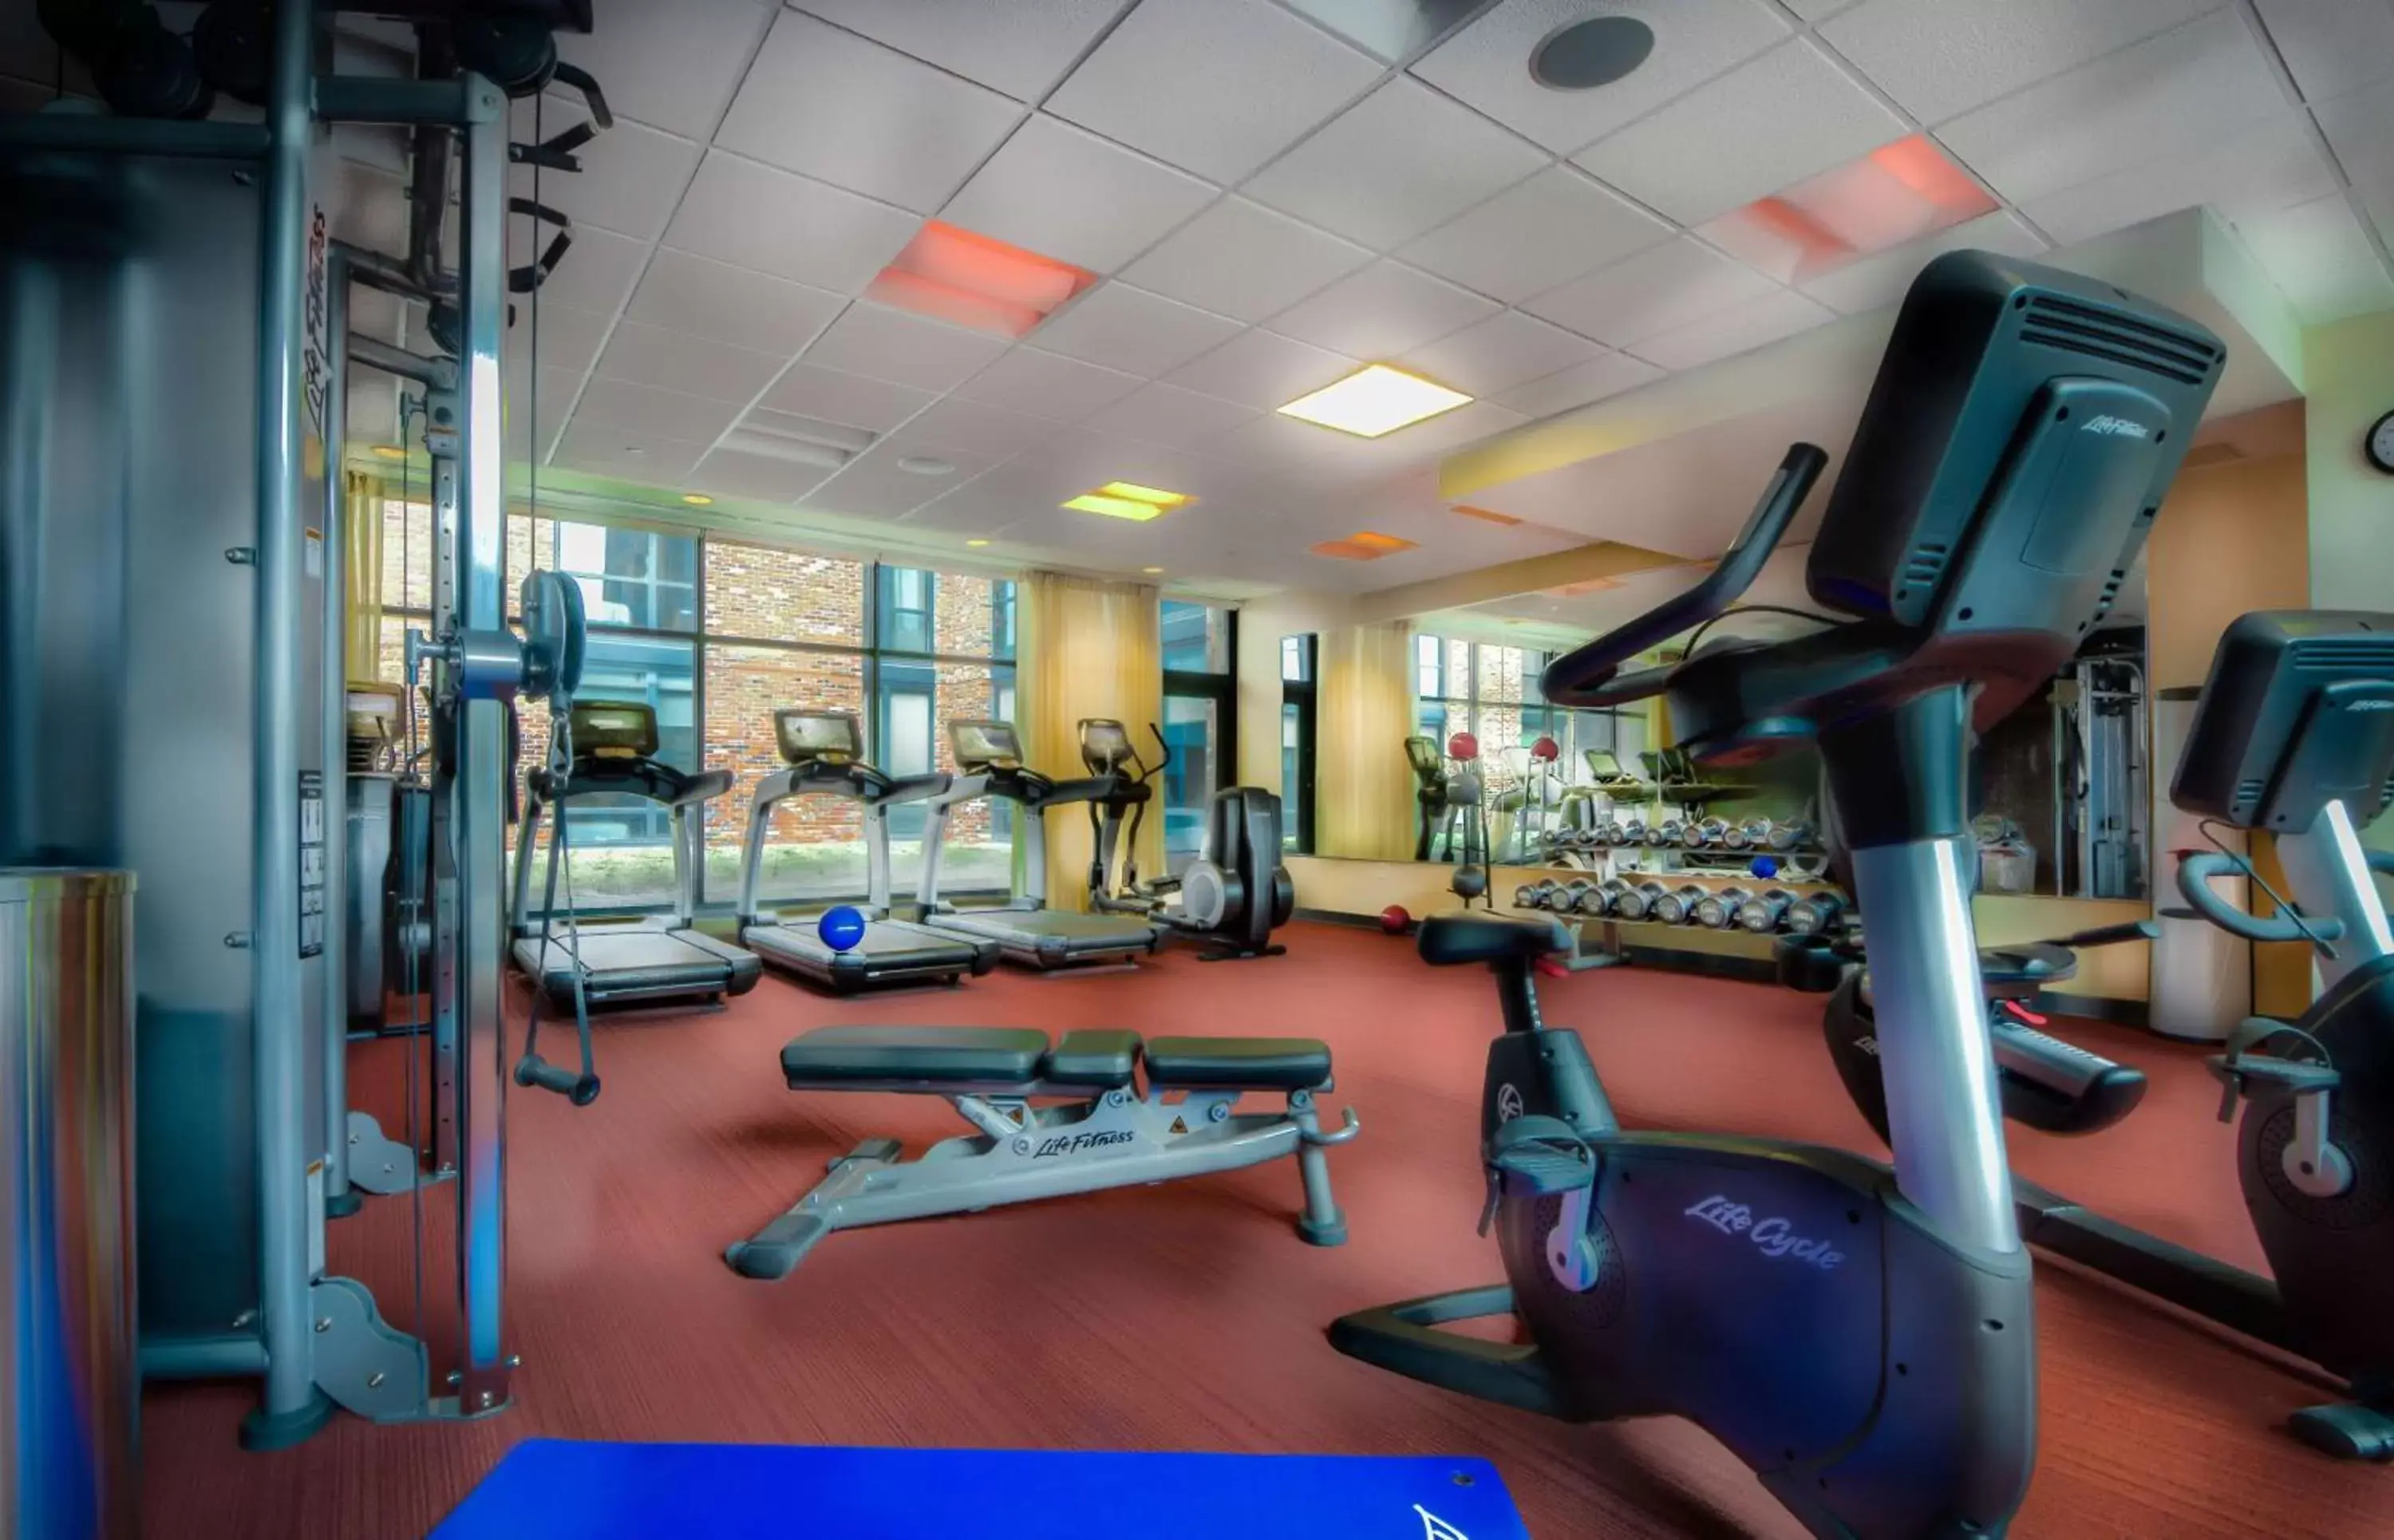 Fitness centre/facilities, Fitness Center/Facilities in Hyatt Place Baltimore Inner Harbor